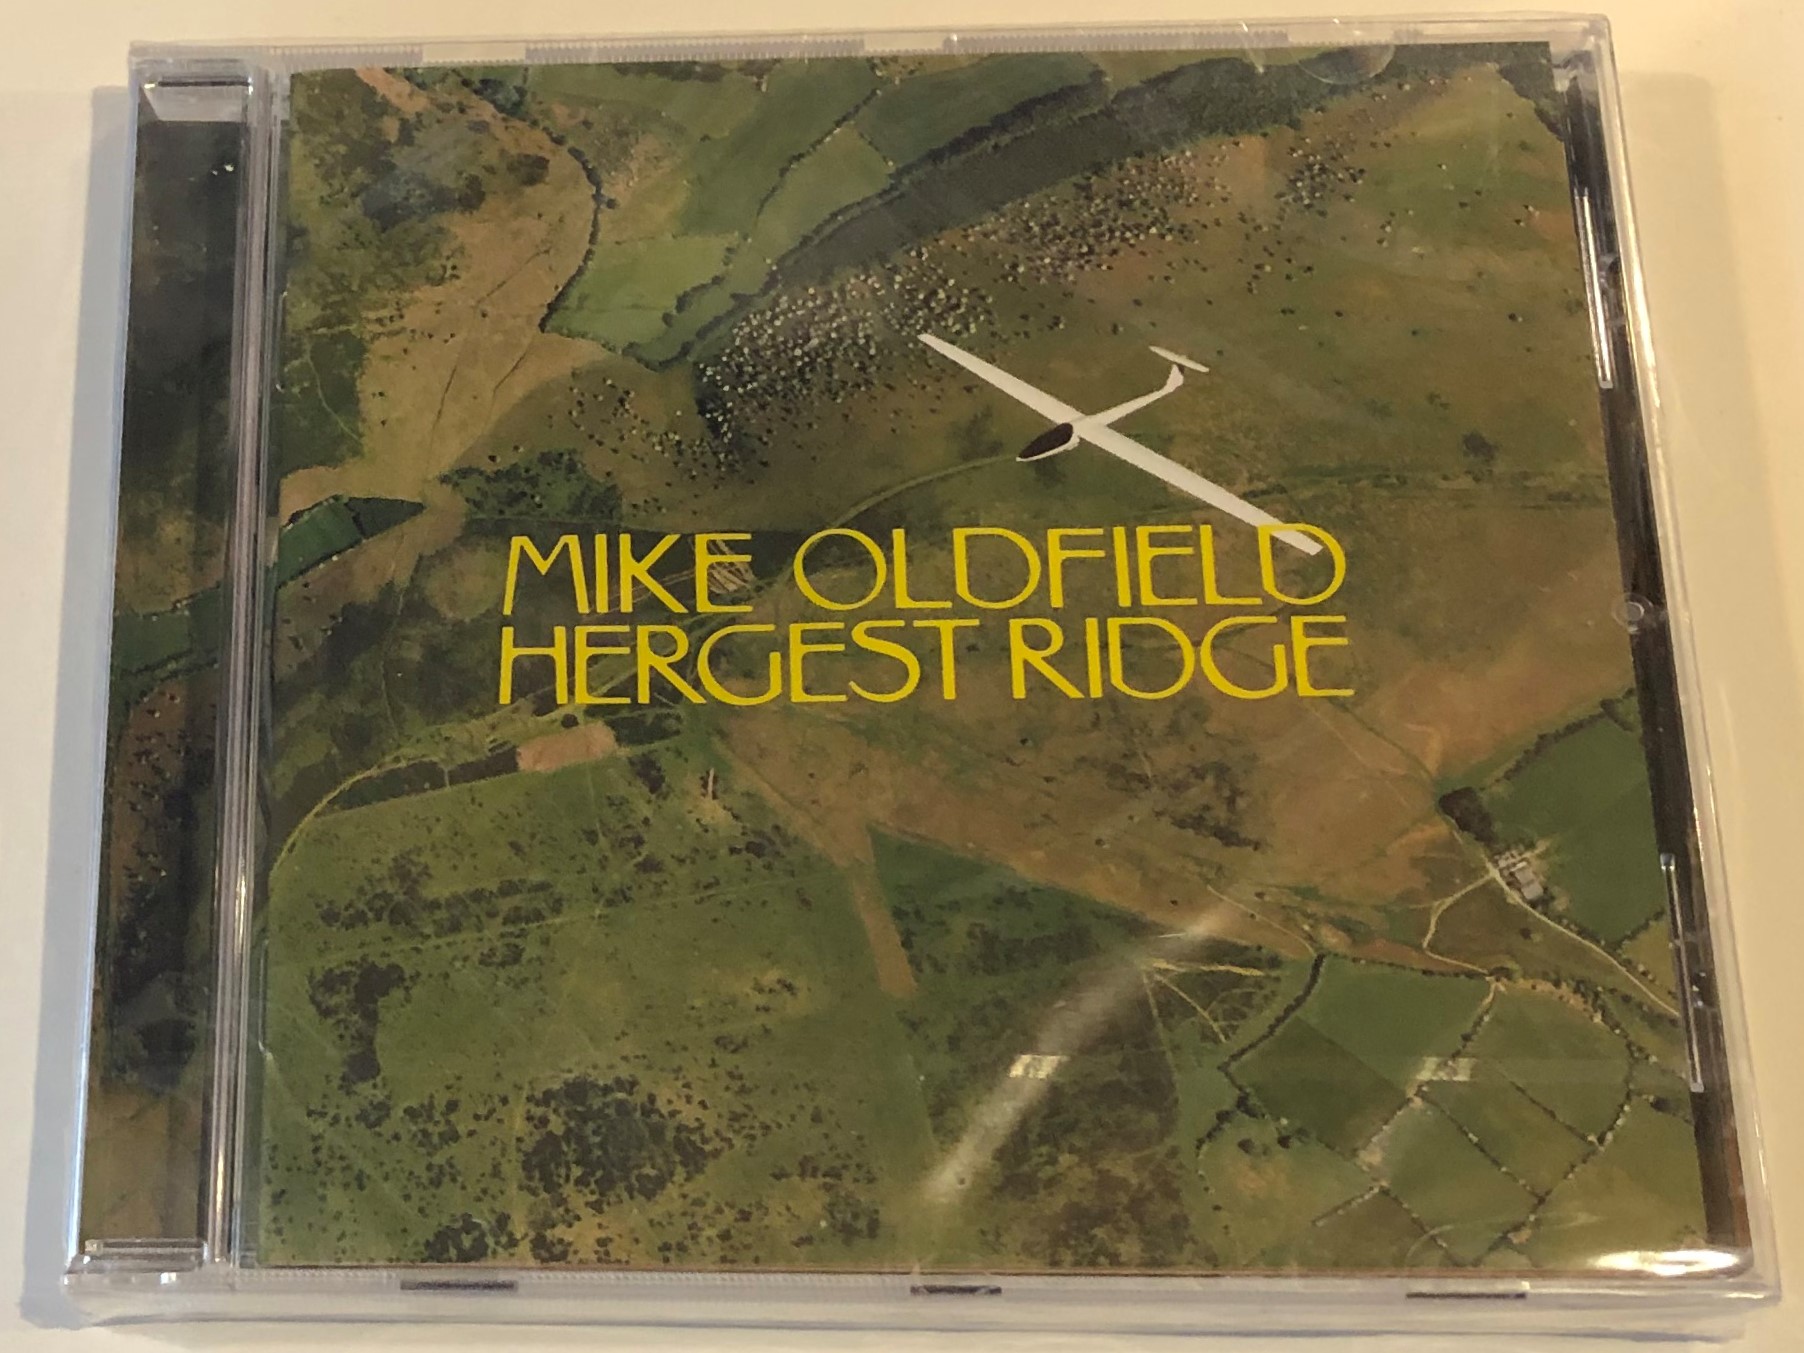 mike-oldfield-hergest-ridge-mercury-audio-cd-2010-532-675-5-1-.jpg